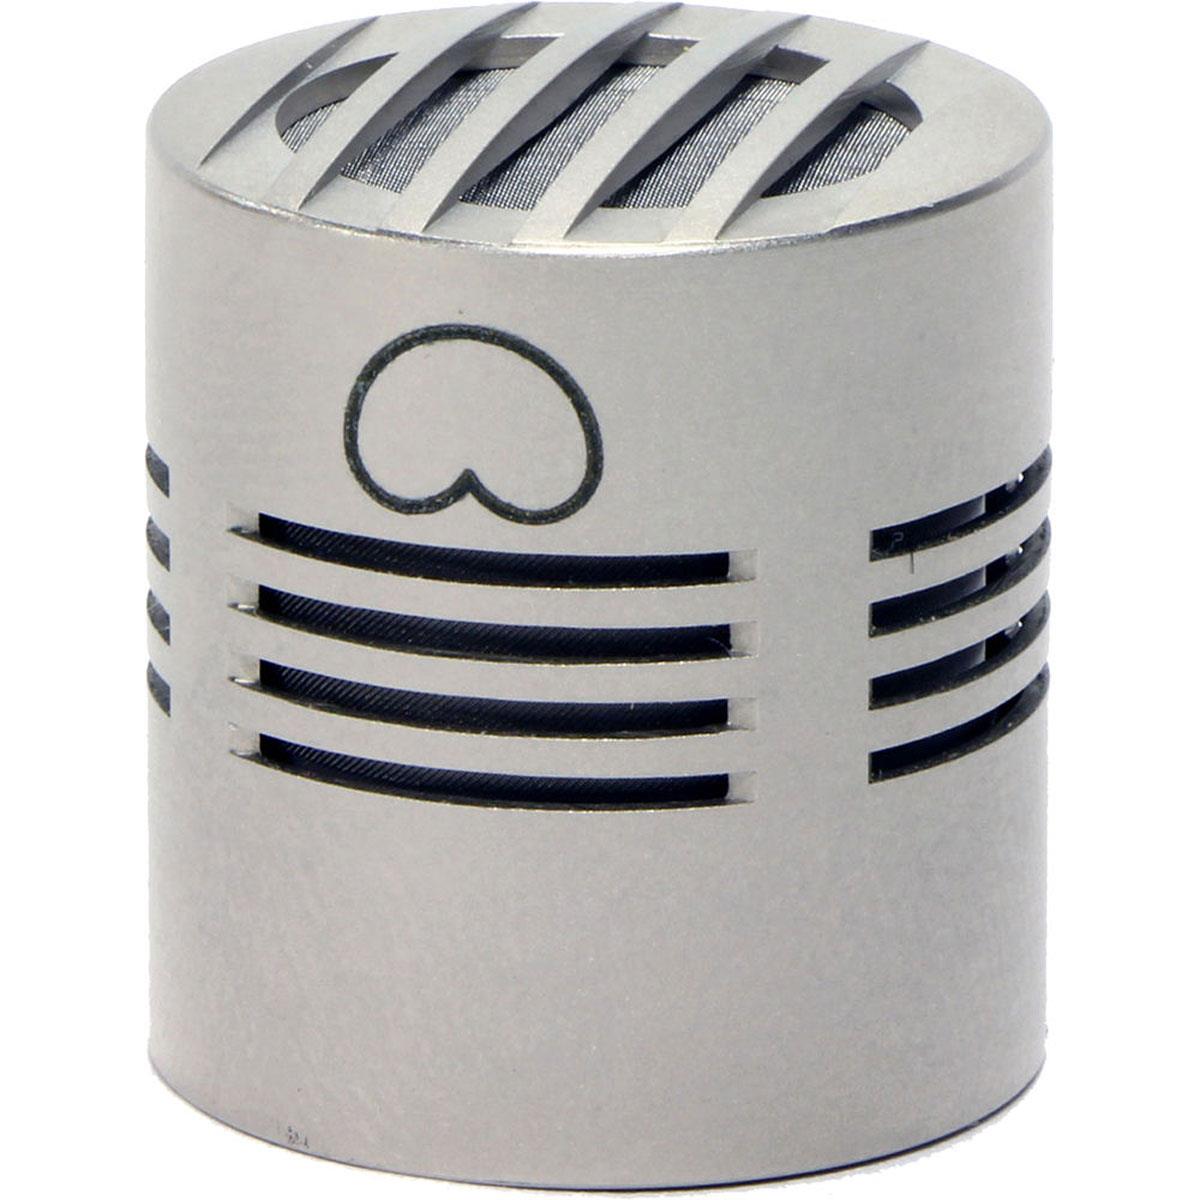 

Schoeps MK 4P Cardioid Microphone Capsule for Close Pickup, Nickel